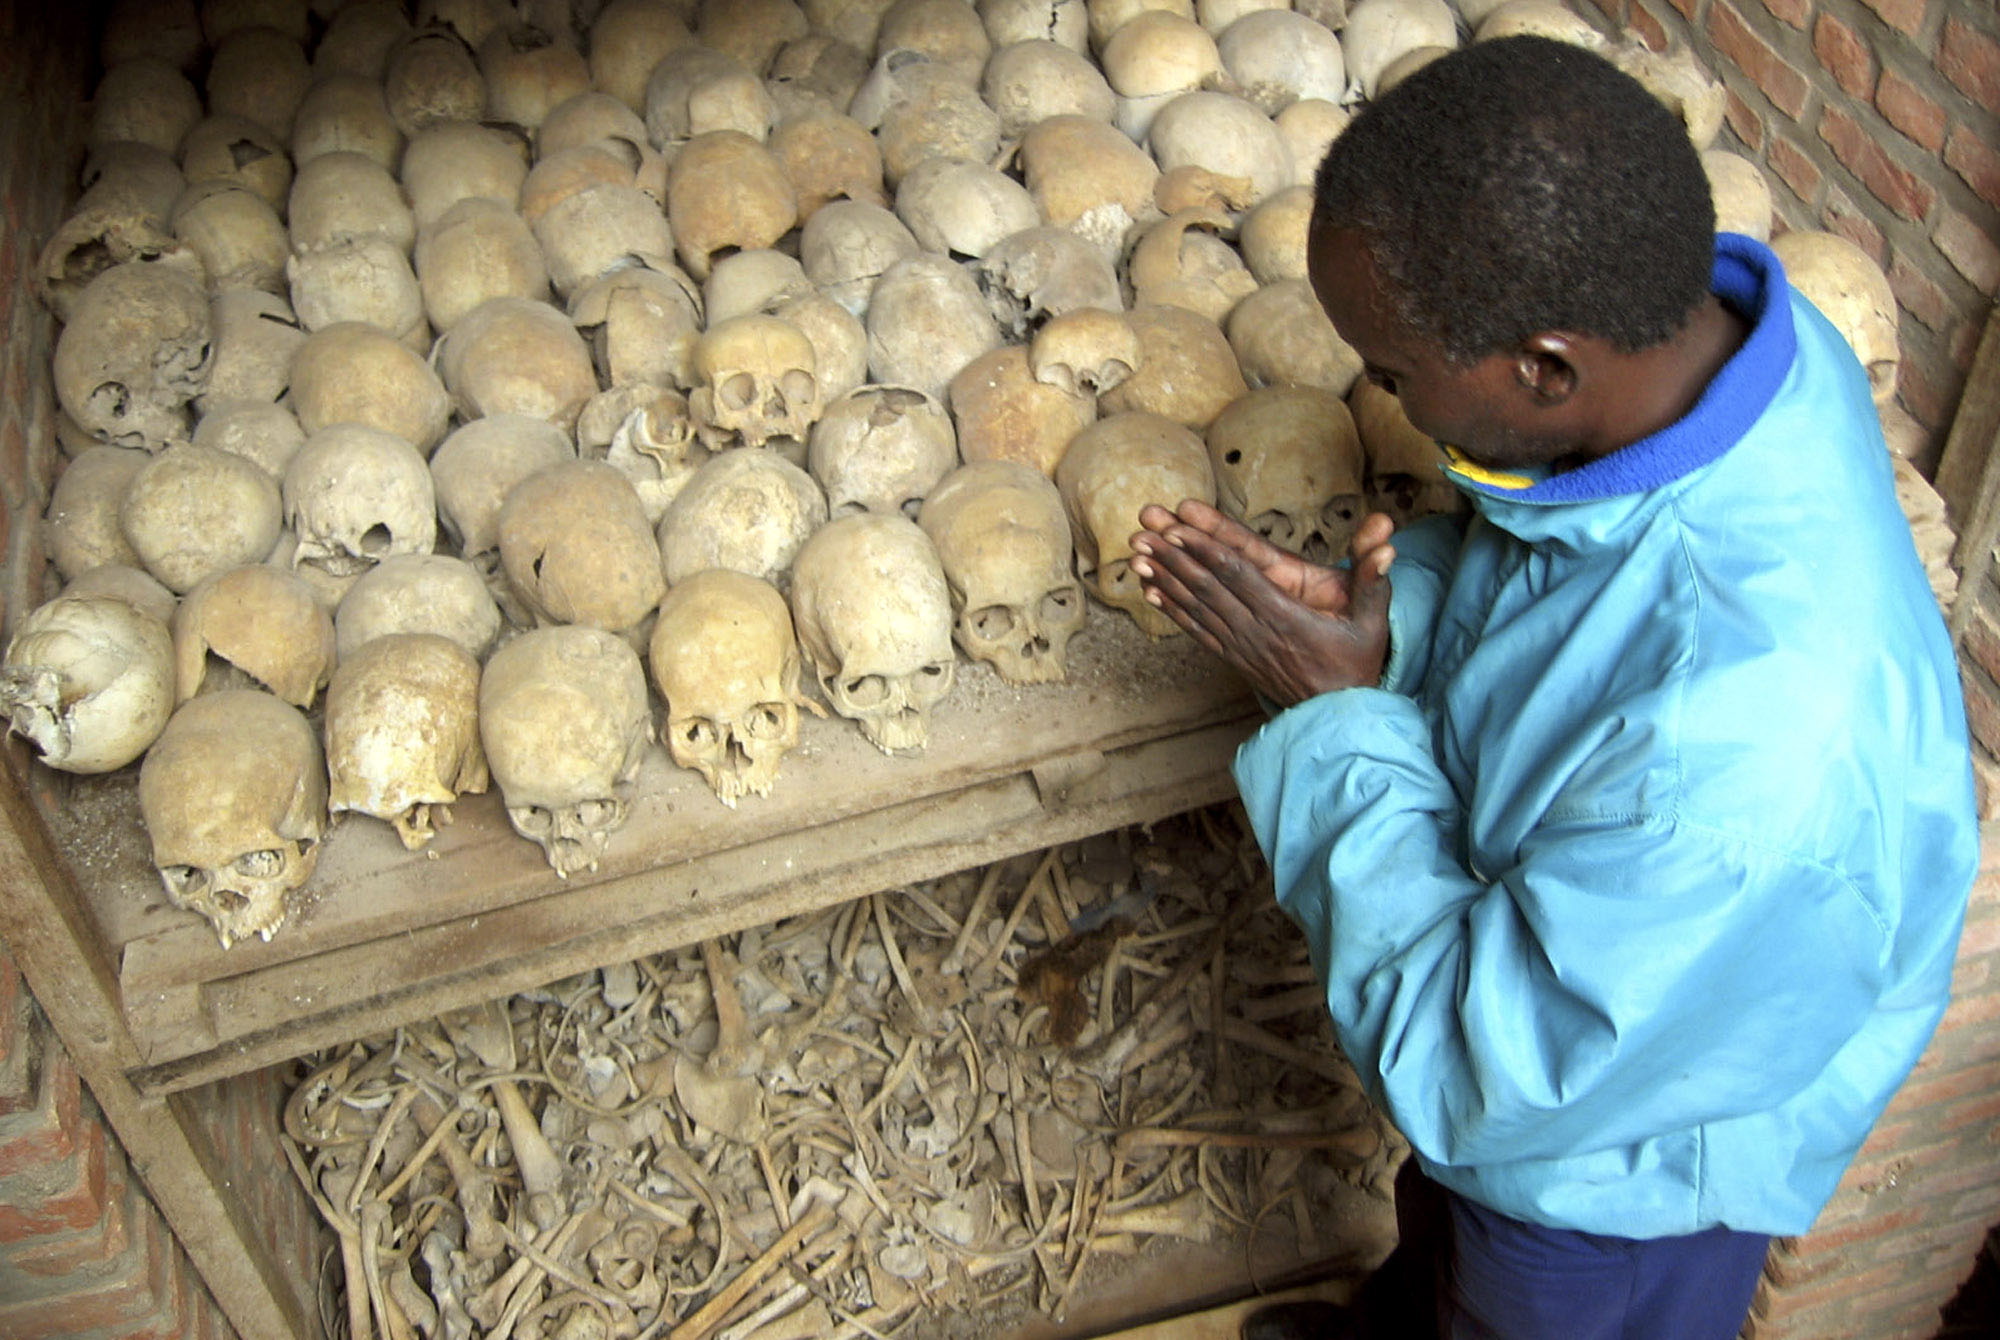 Folkmord, FN, Afrika, Rwanda, Etnisk rensning